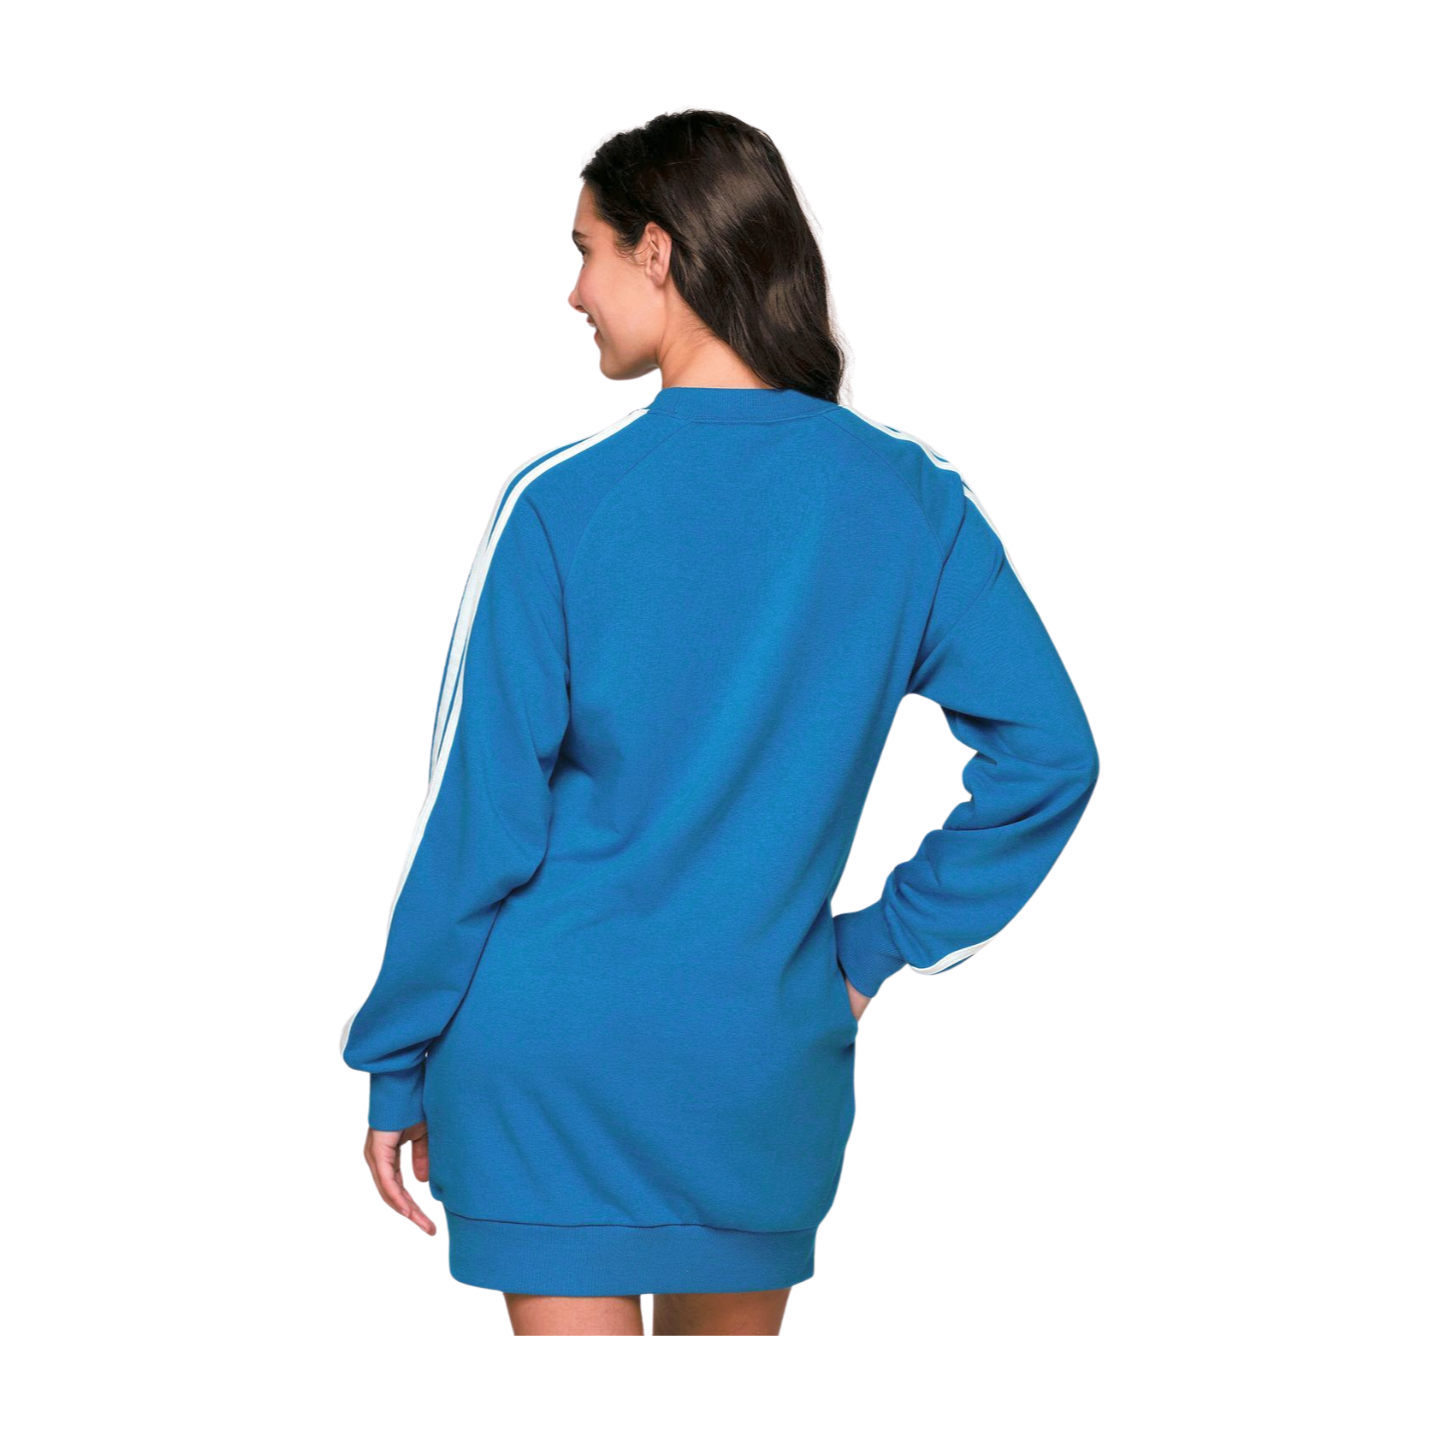 Zumba Move The World Sweatshirt Dress (Special Order)